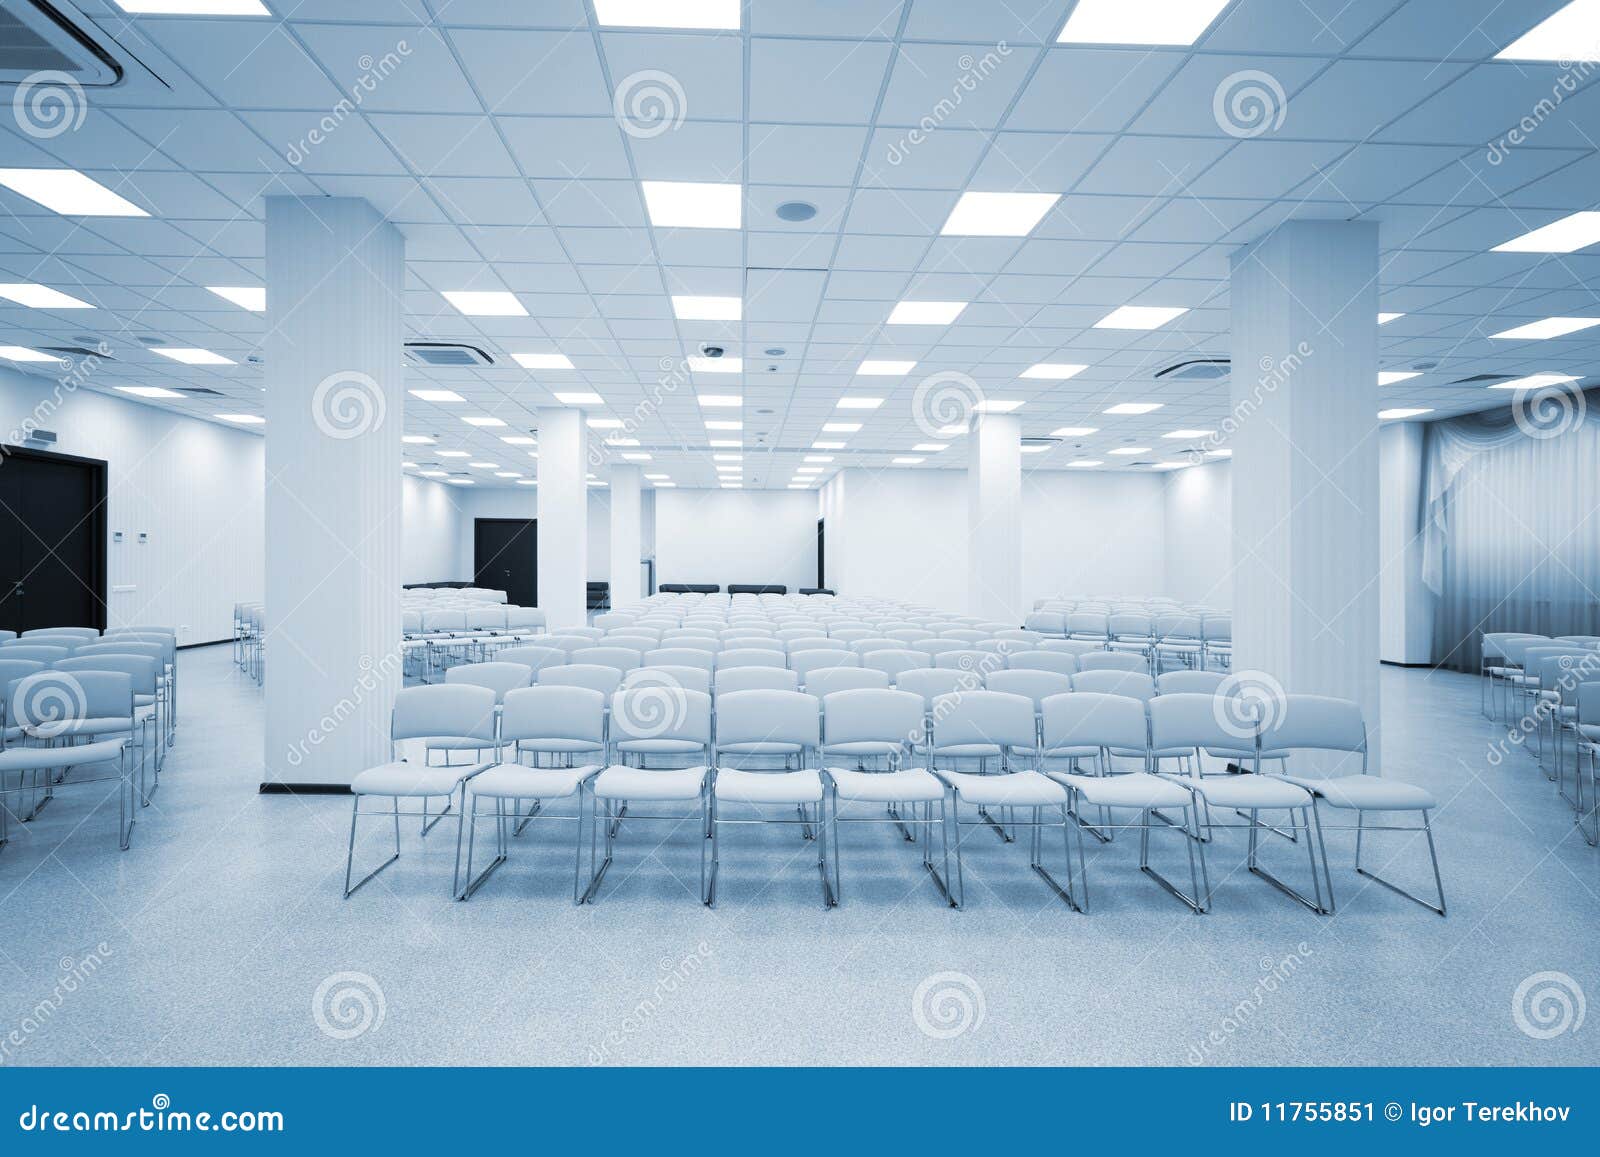 Modern Auditorium Stock Image Image Of Classroom